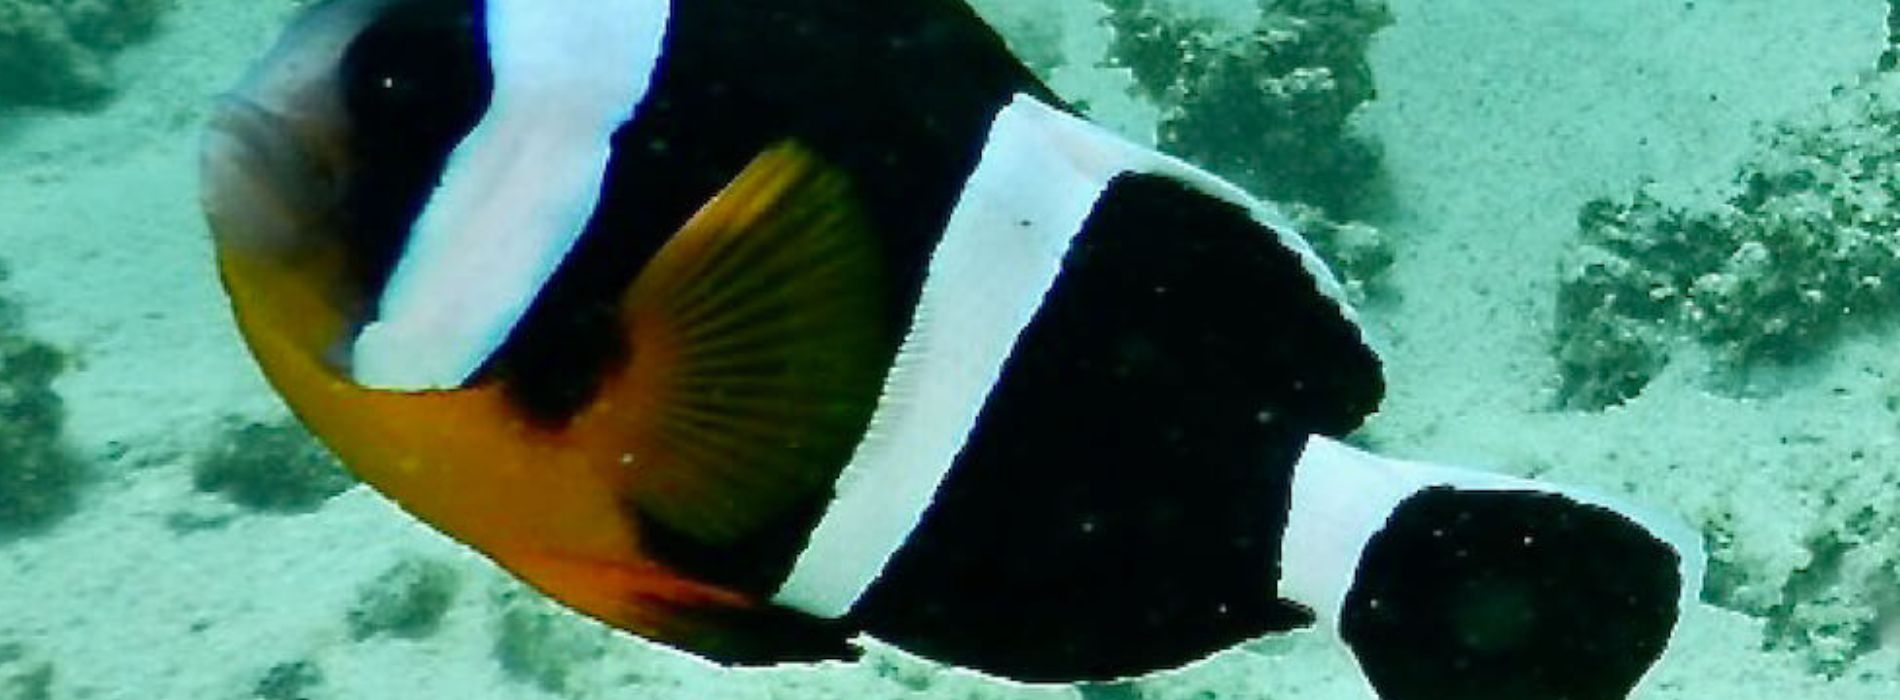 Mauritian-anemonefish-side-view